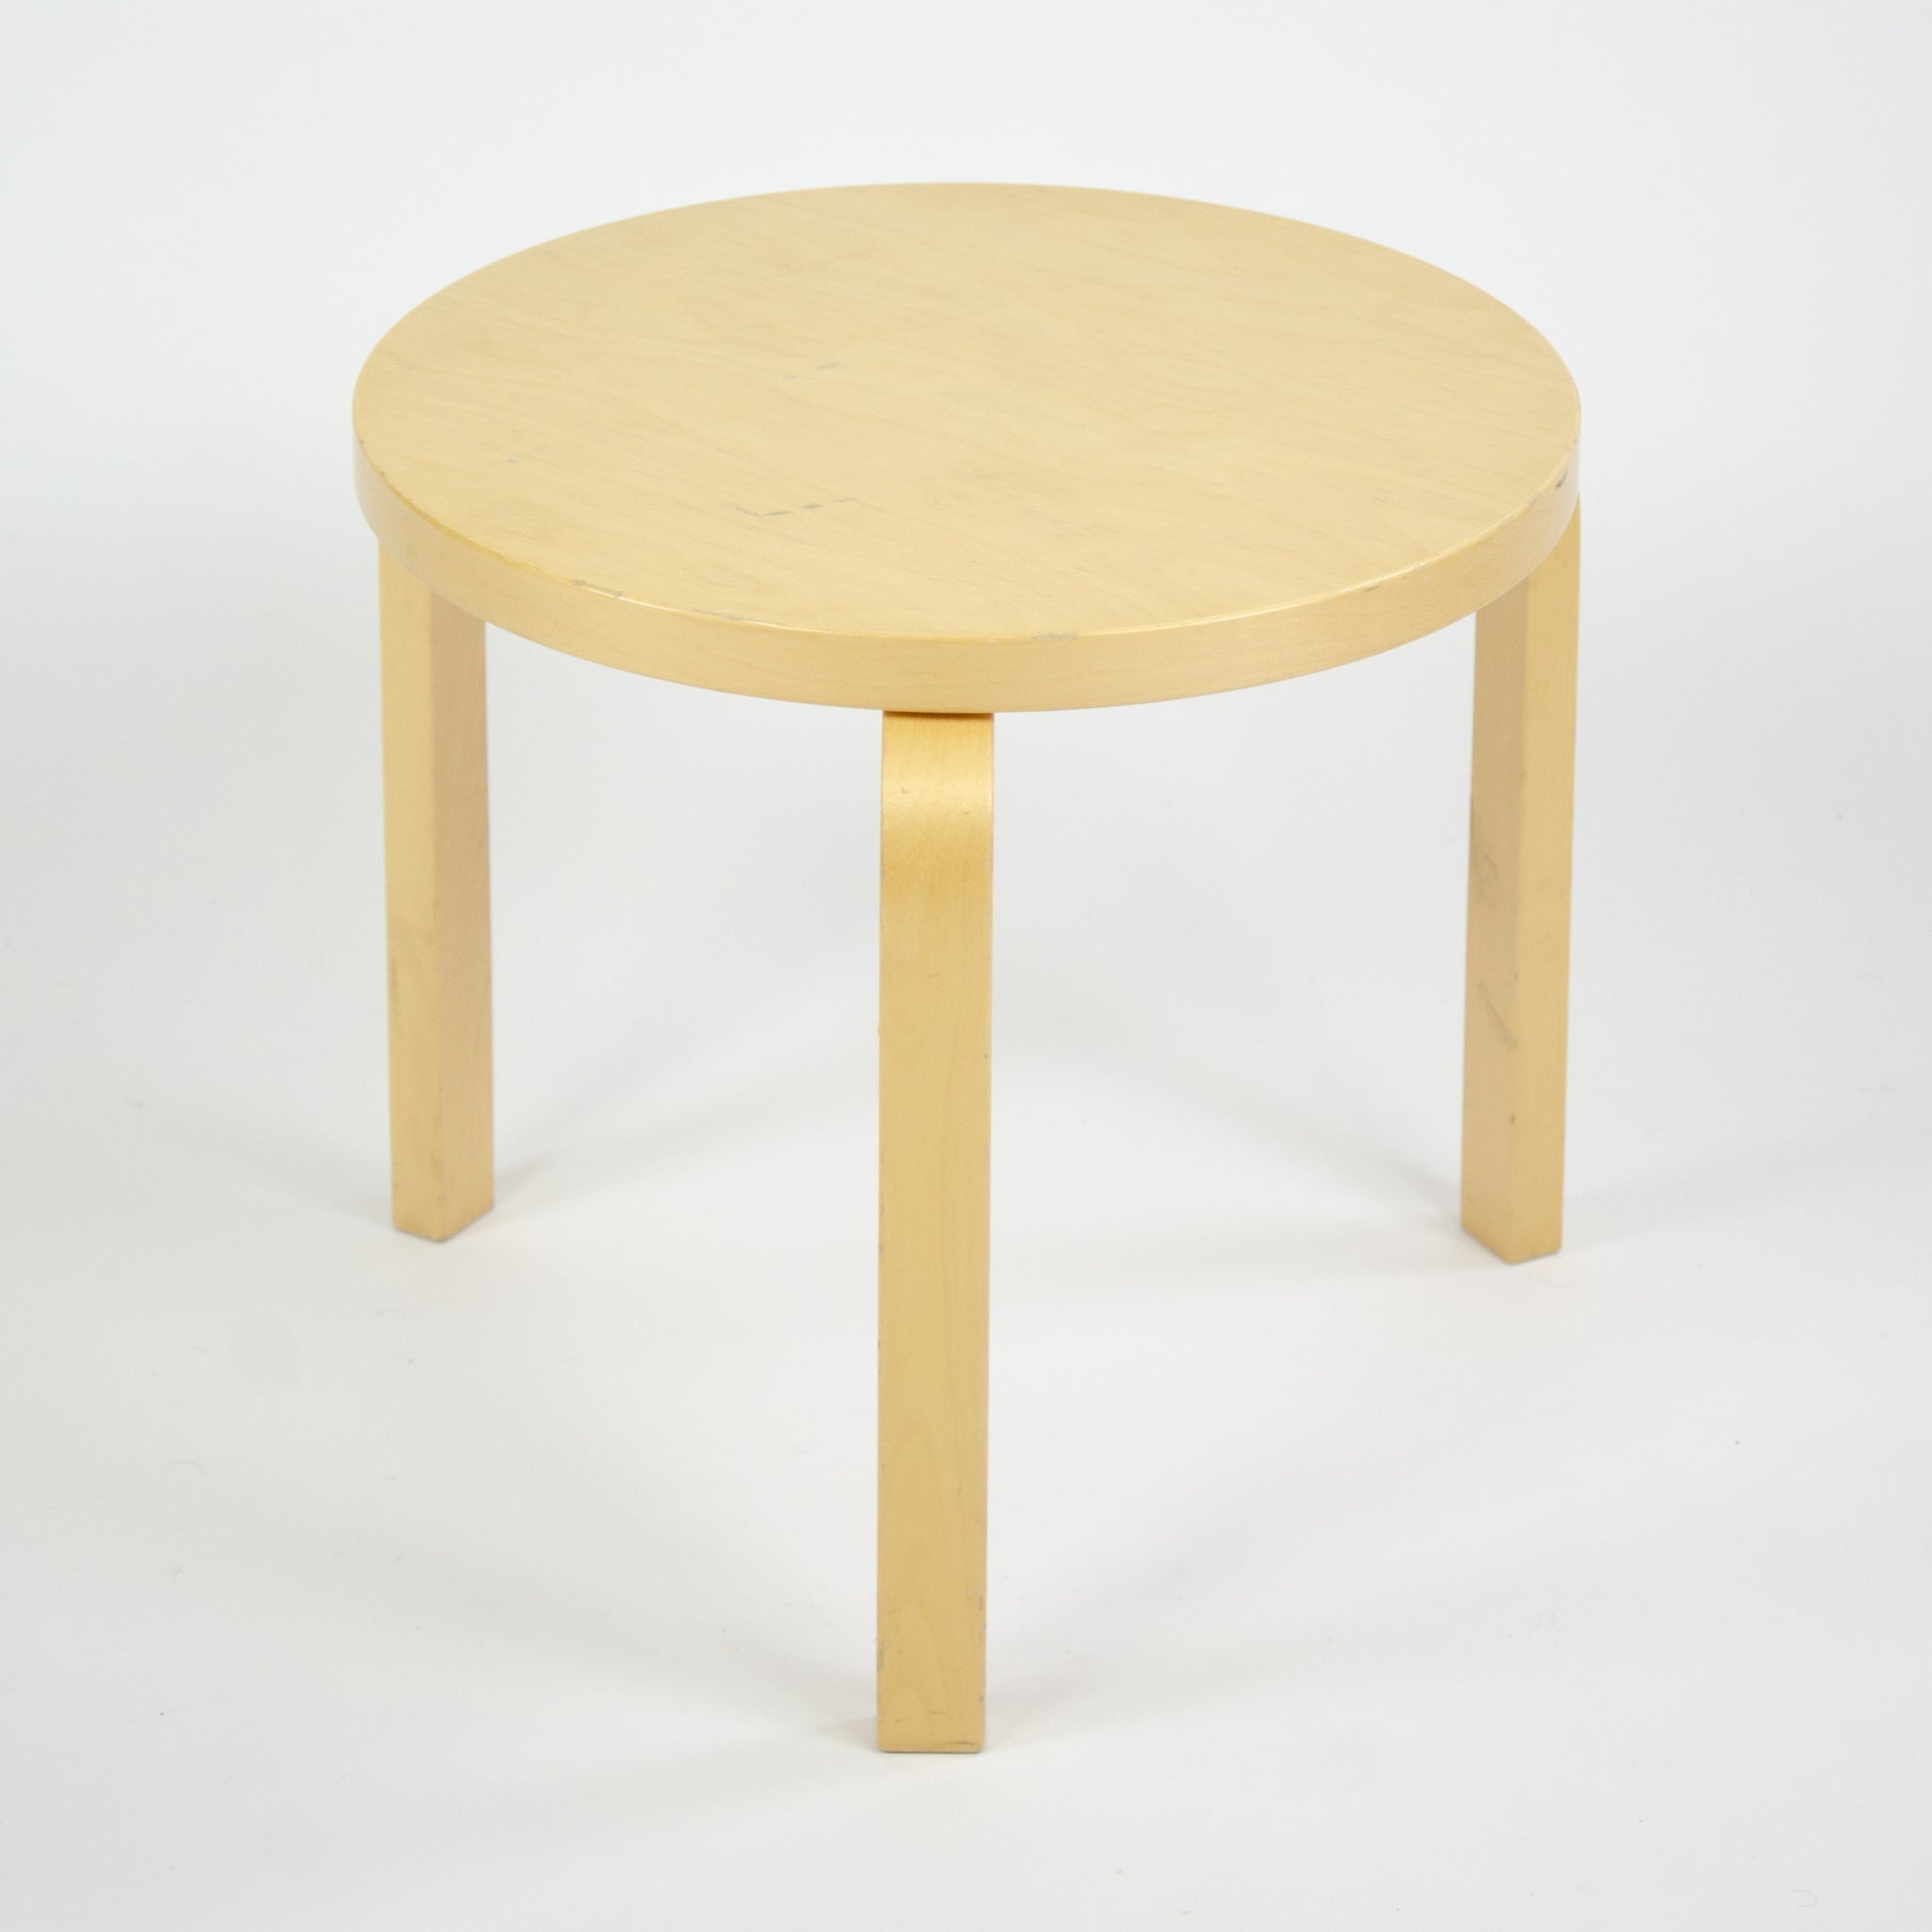 SOLD Alvar Aalto Round Side Table 60 by Artek in Birch